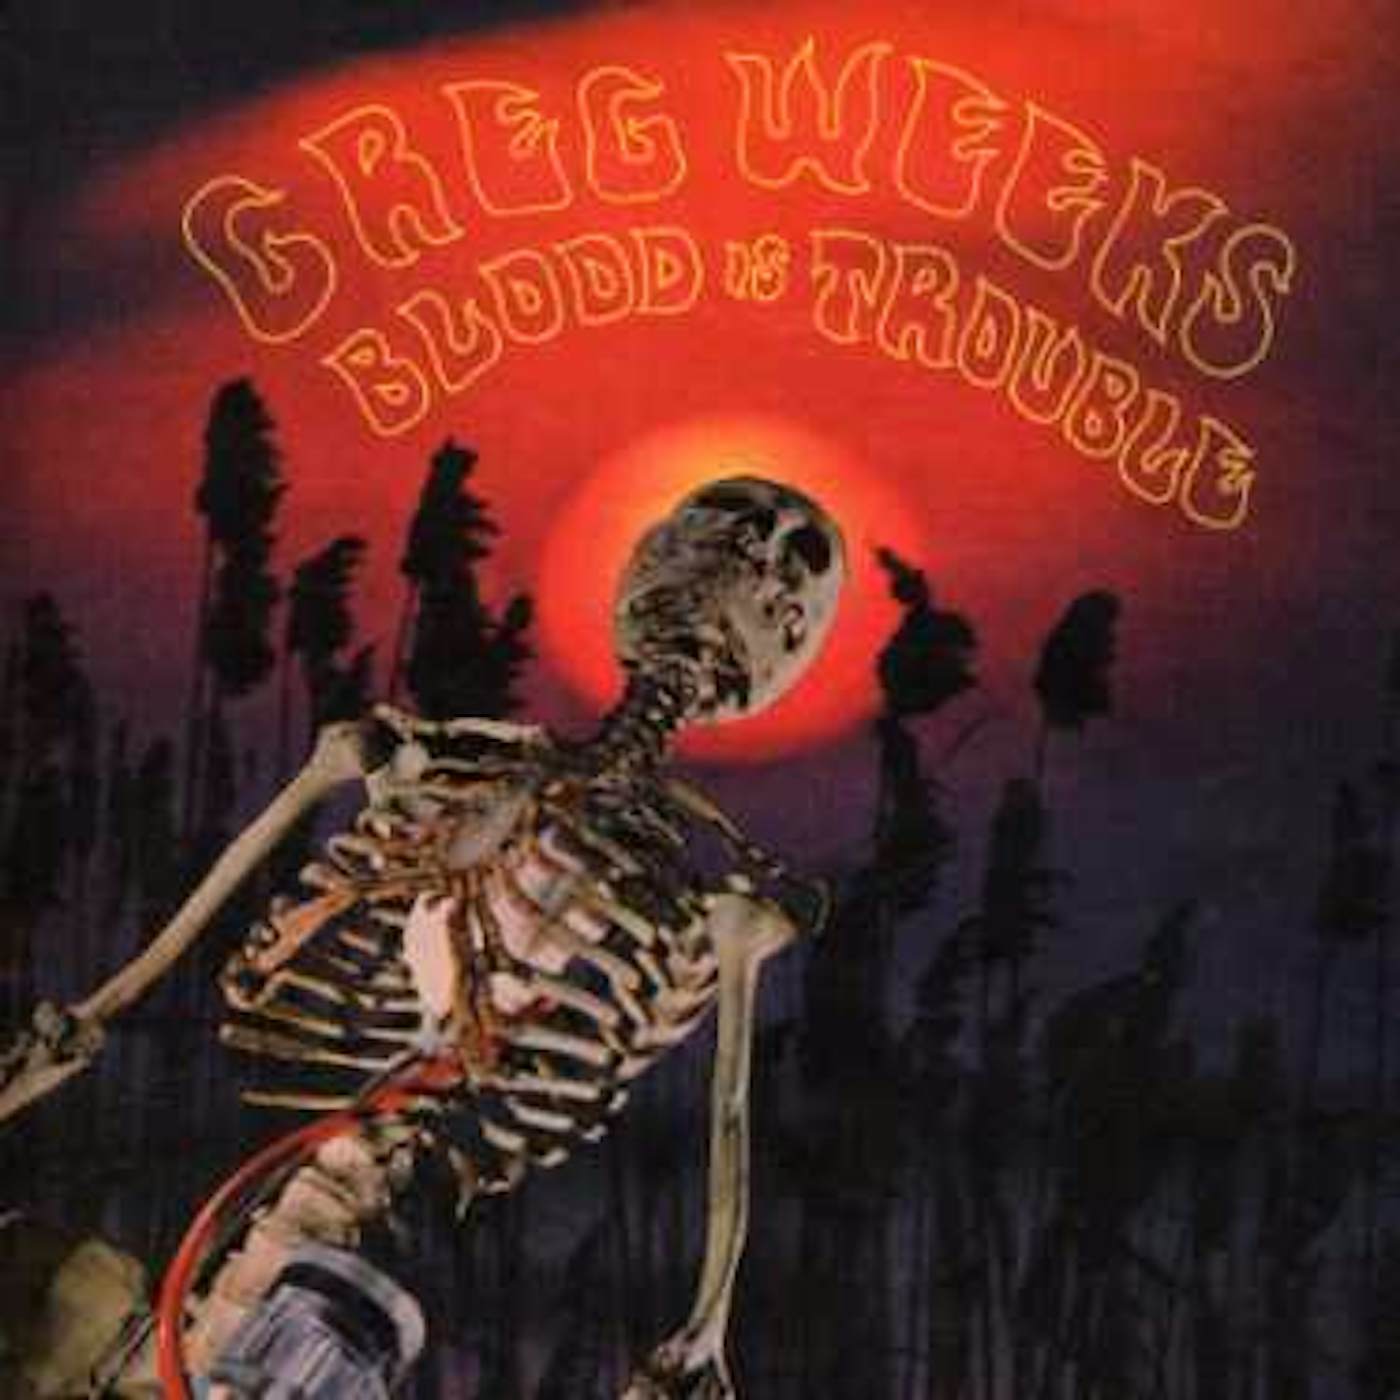 Greg Weeks BLOOD IS TROUBLE CD